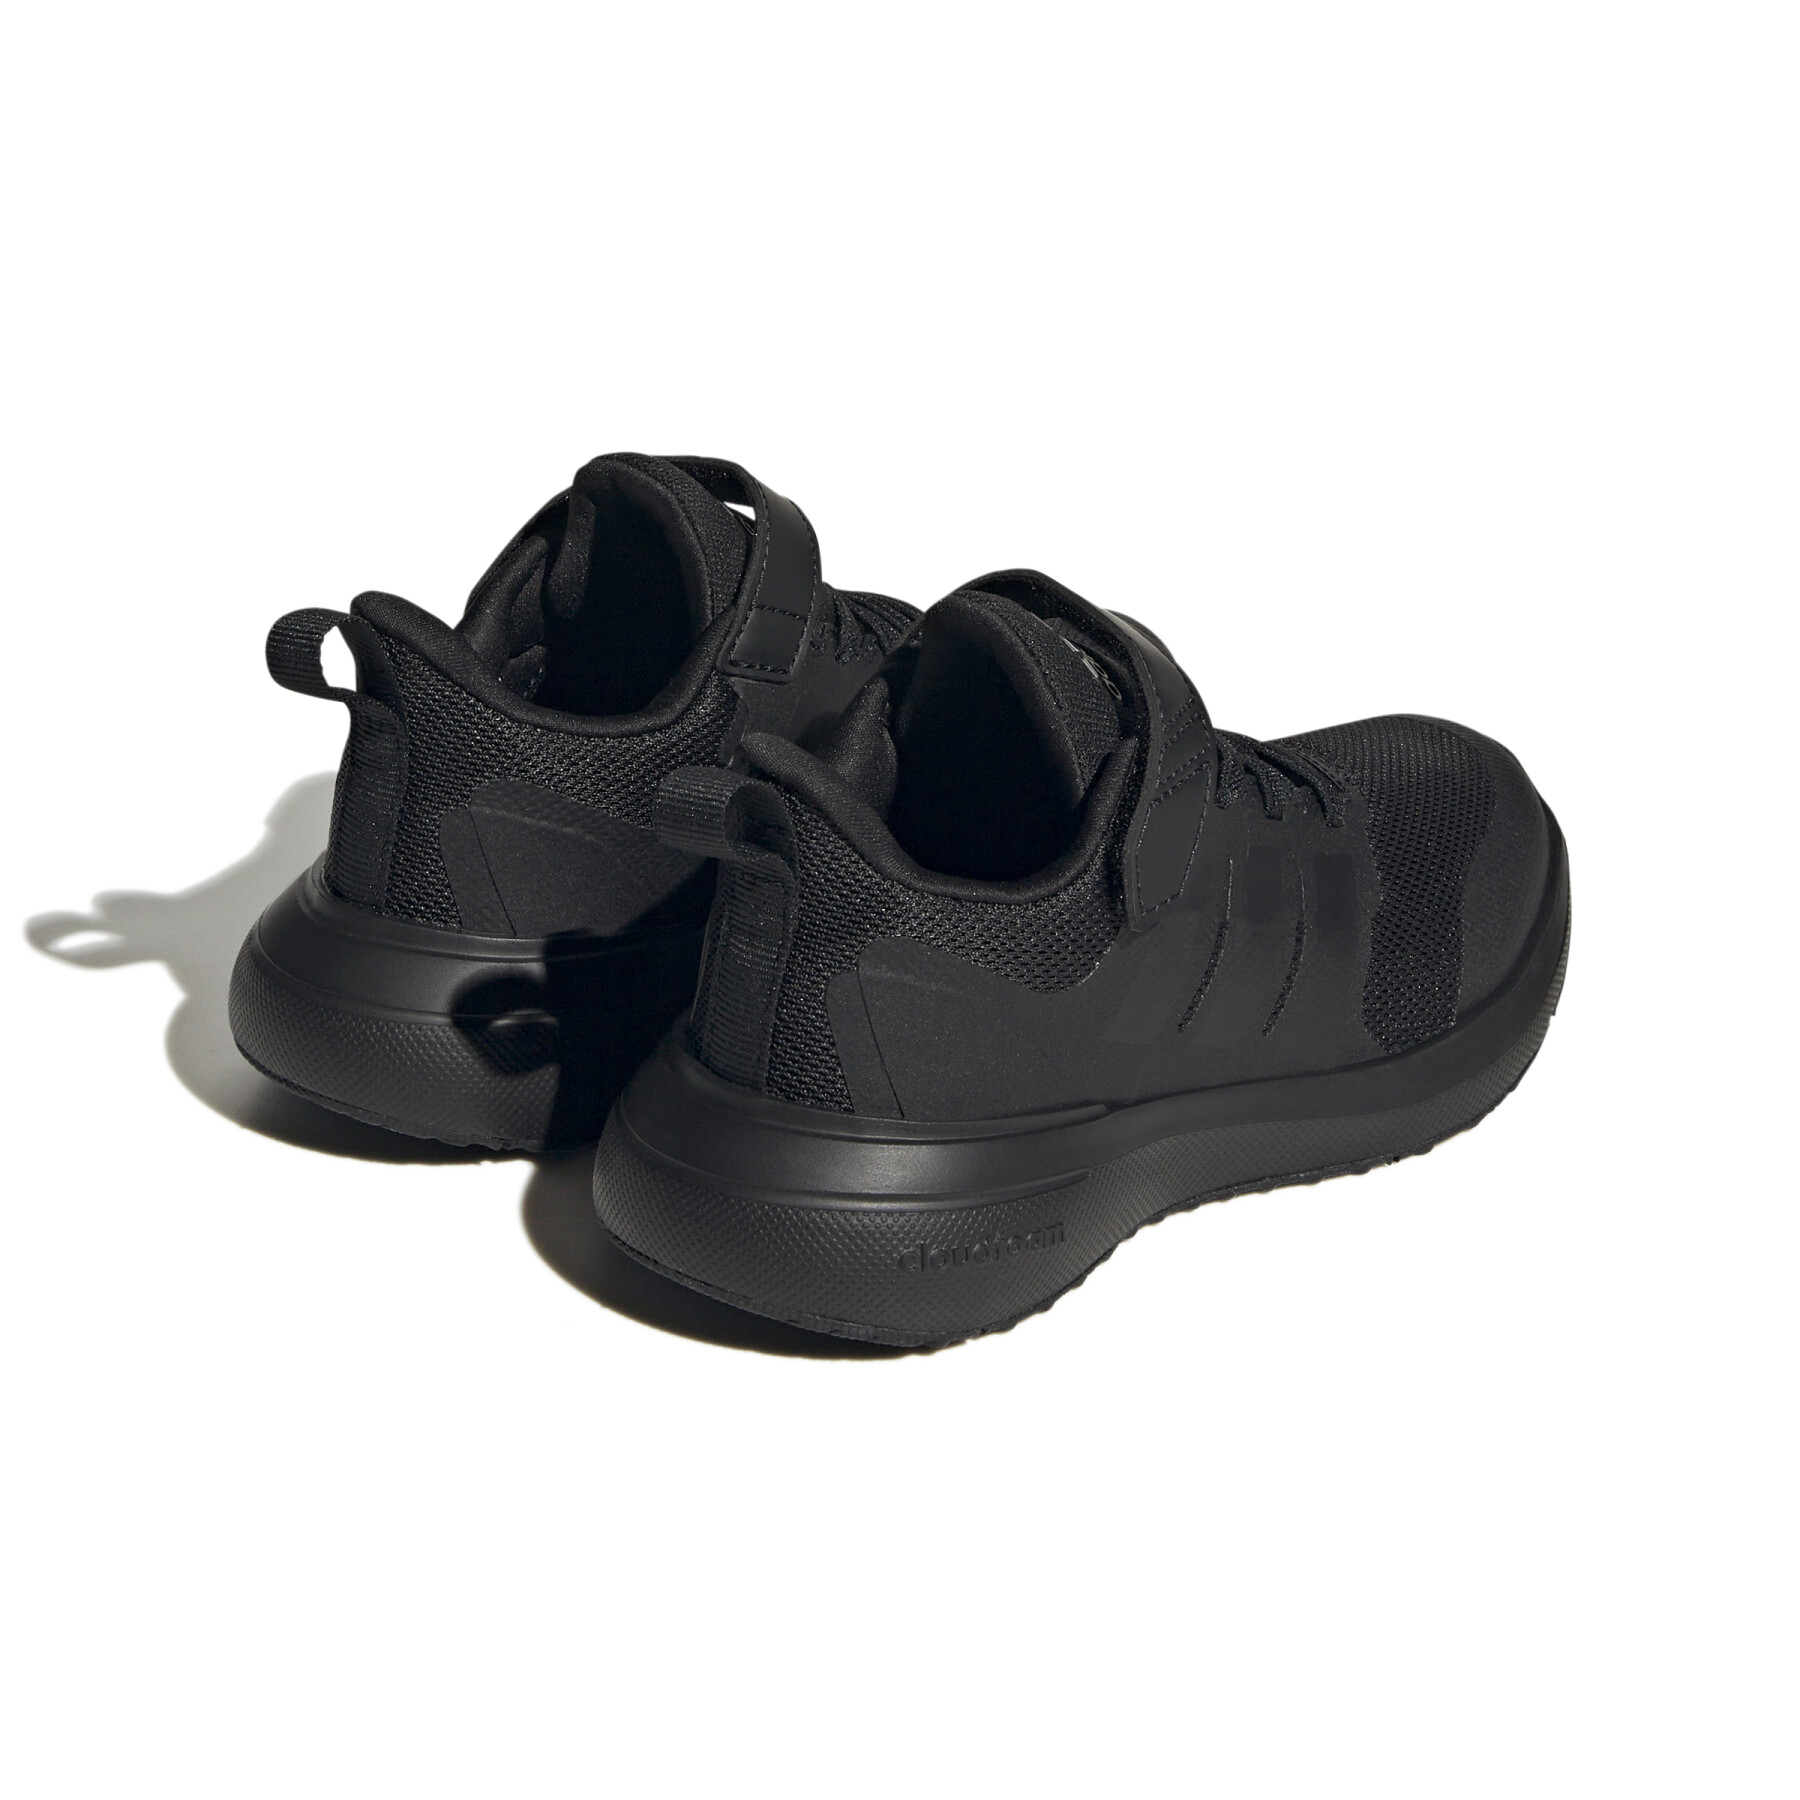 Kinder-Laufschuhe adidas Fortarun 2.0 Cloudfoam